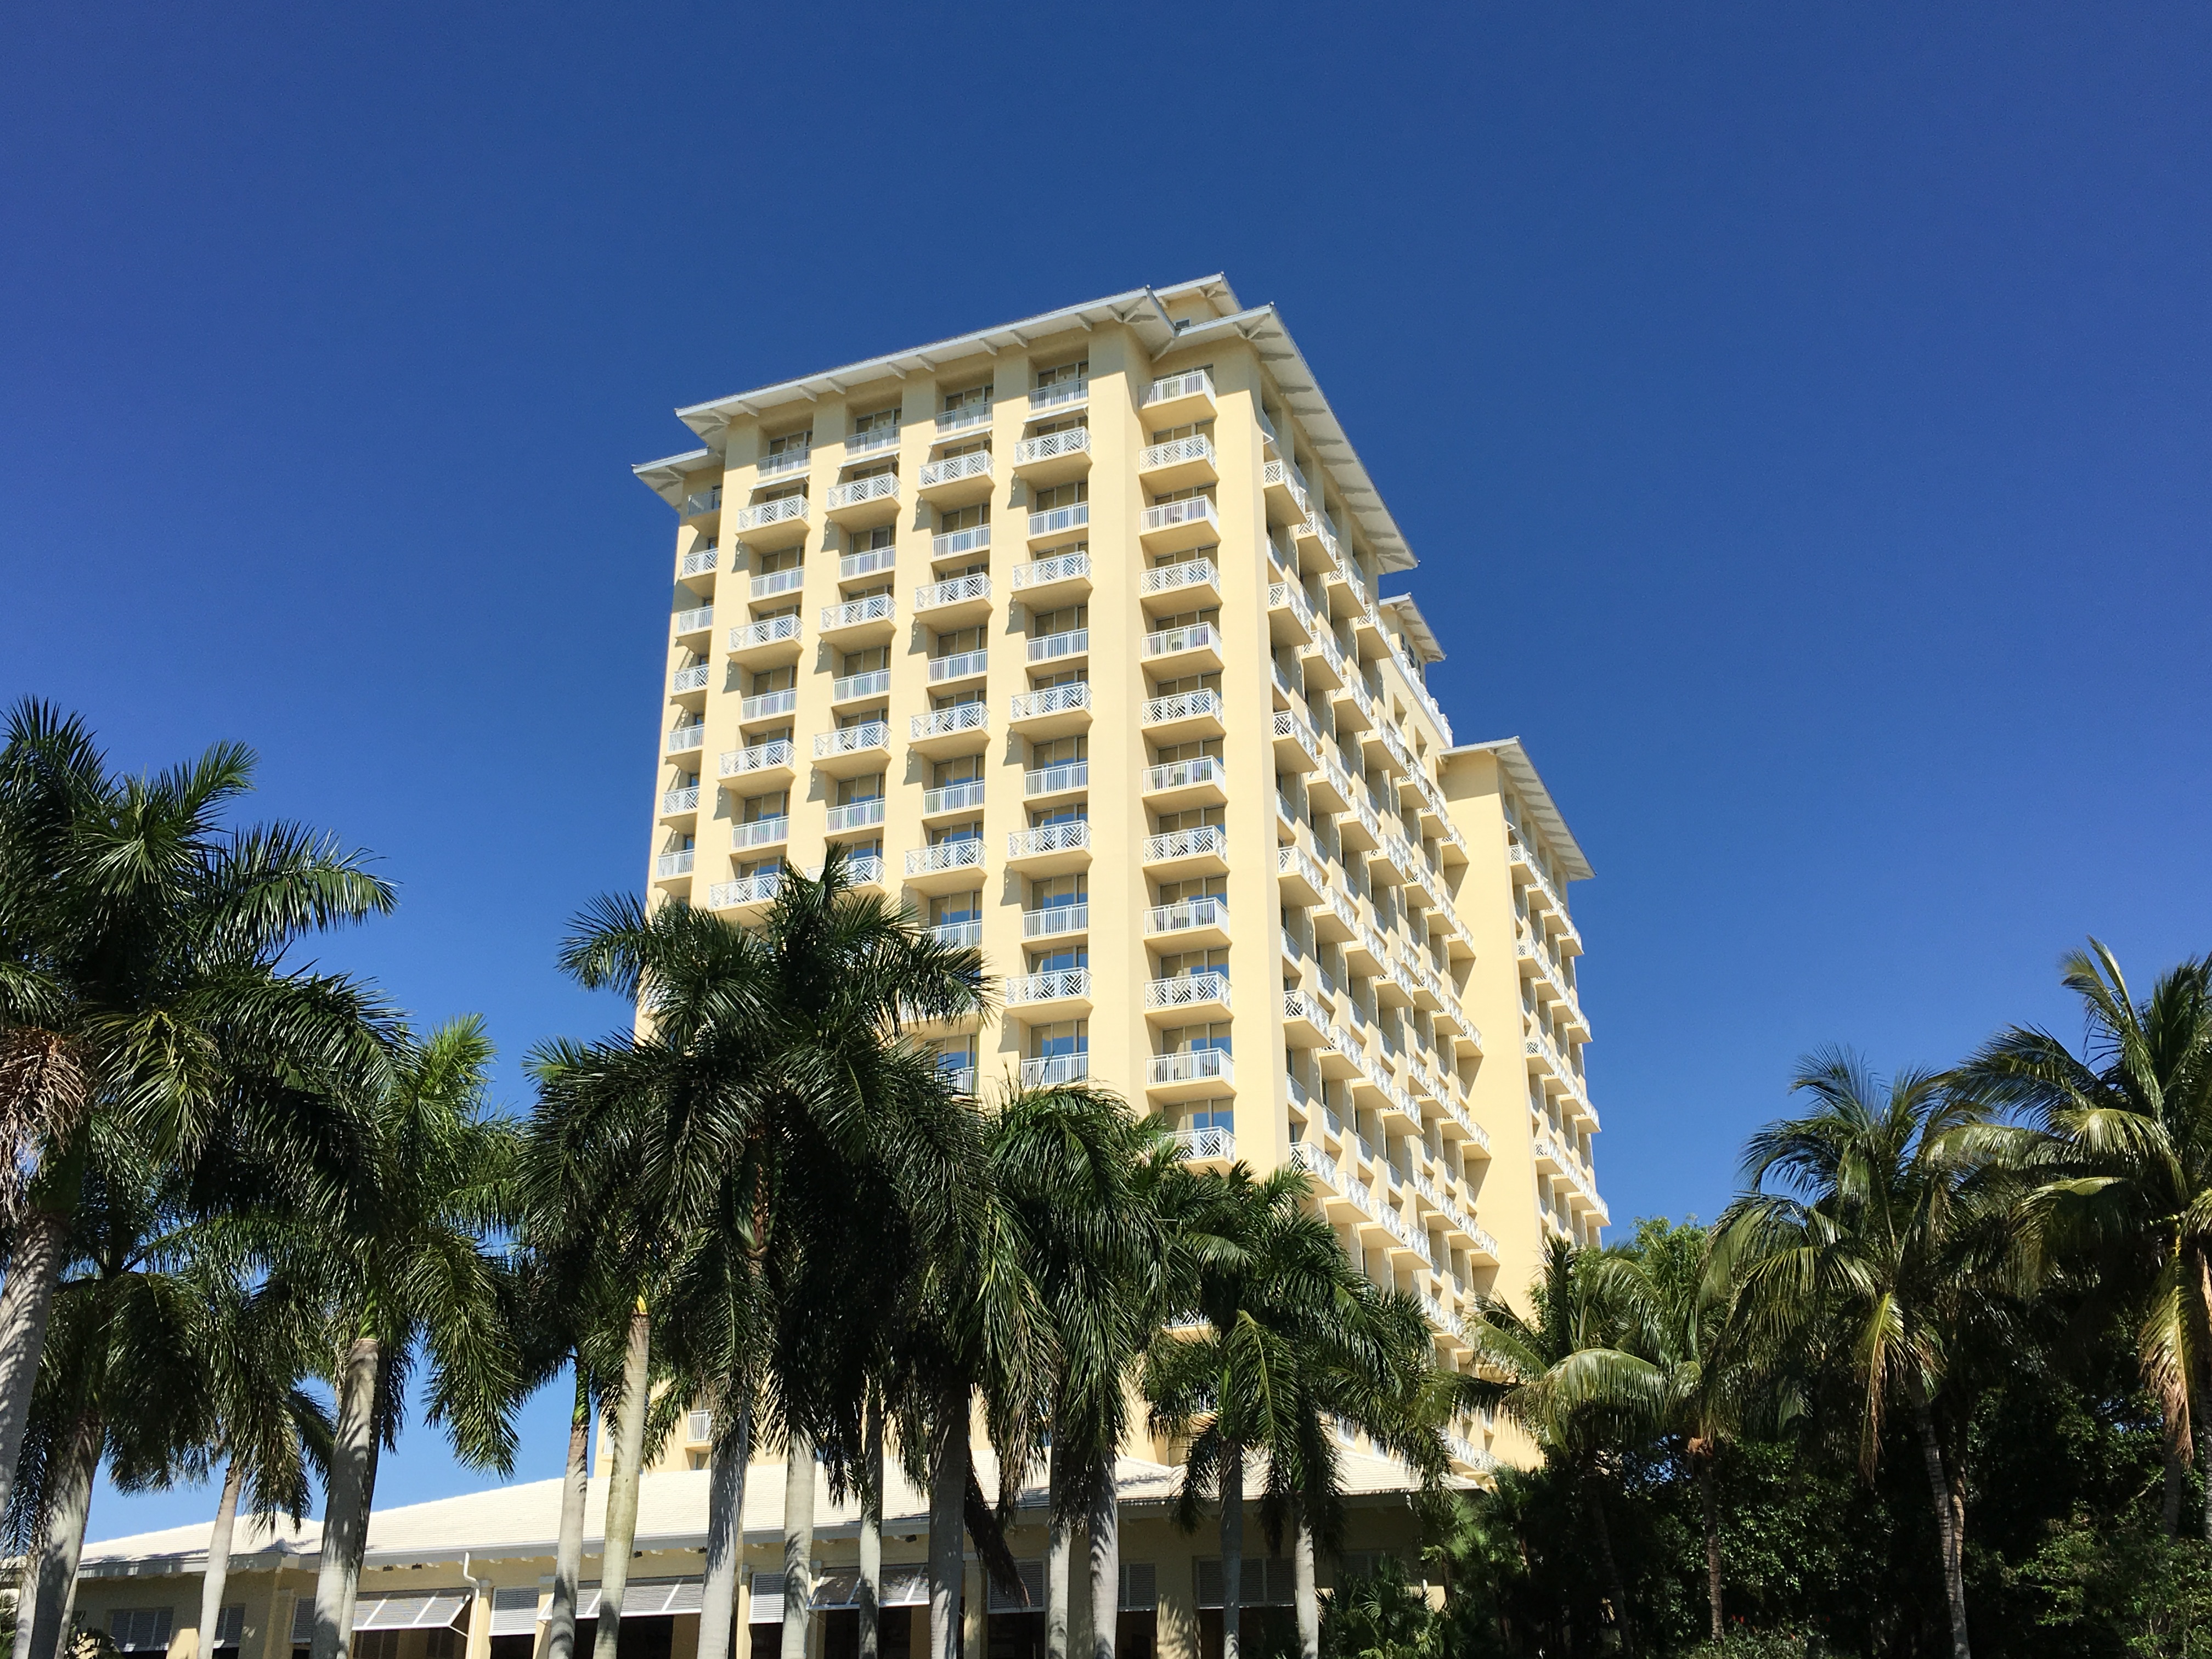 Hotel Review: Hyatt Regency Coconut Point, Part 1